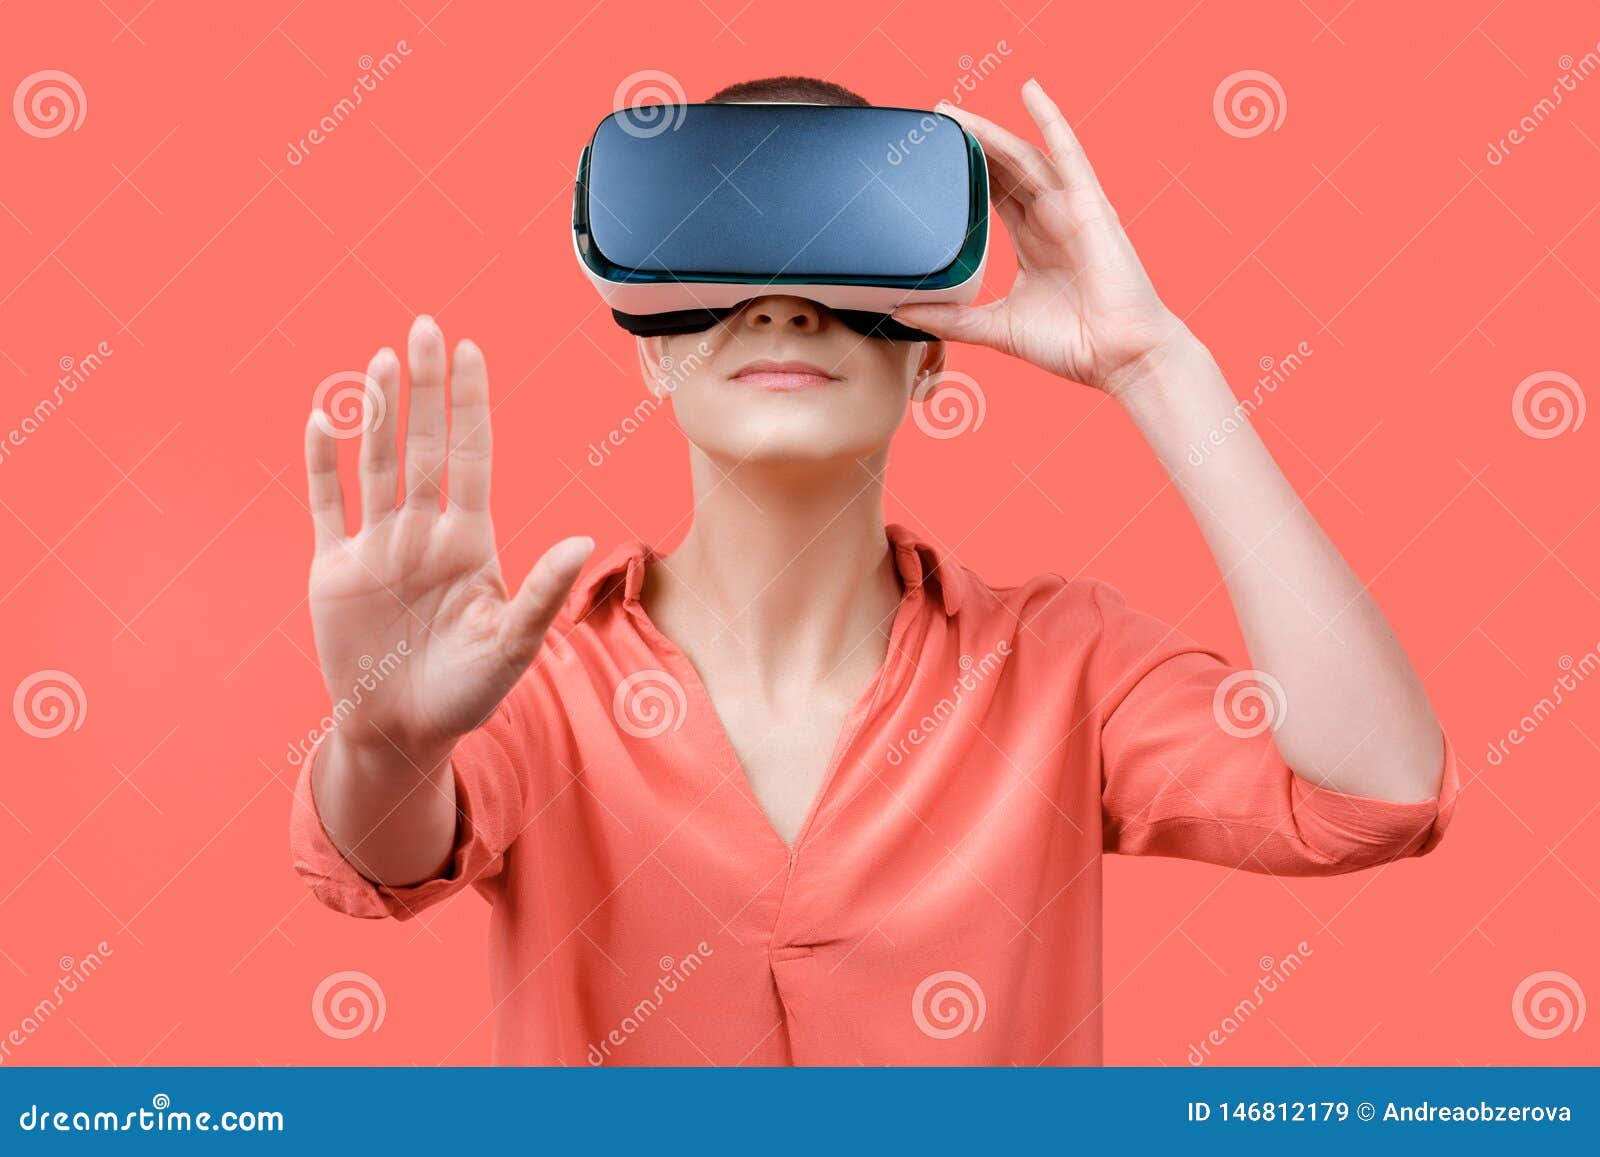 Woman wearing a virtual reality headset - Stock Image 